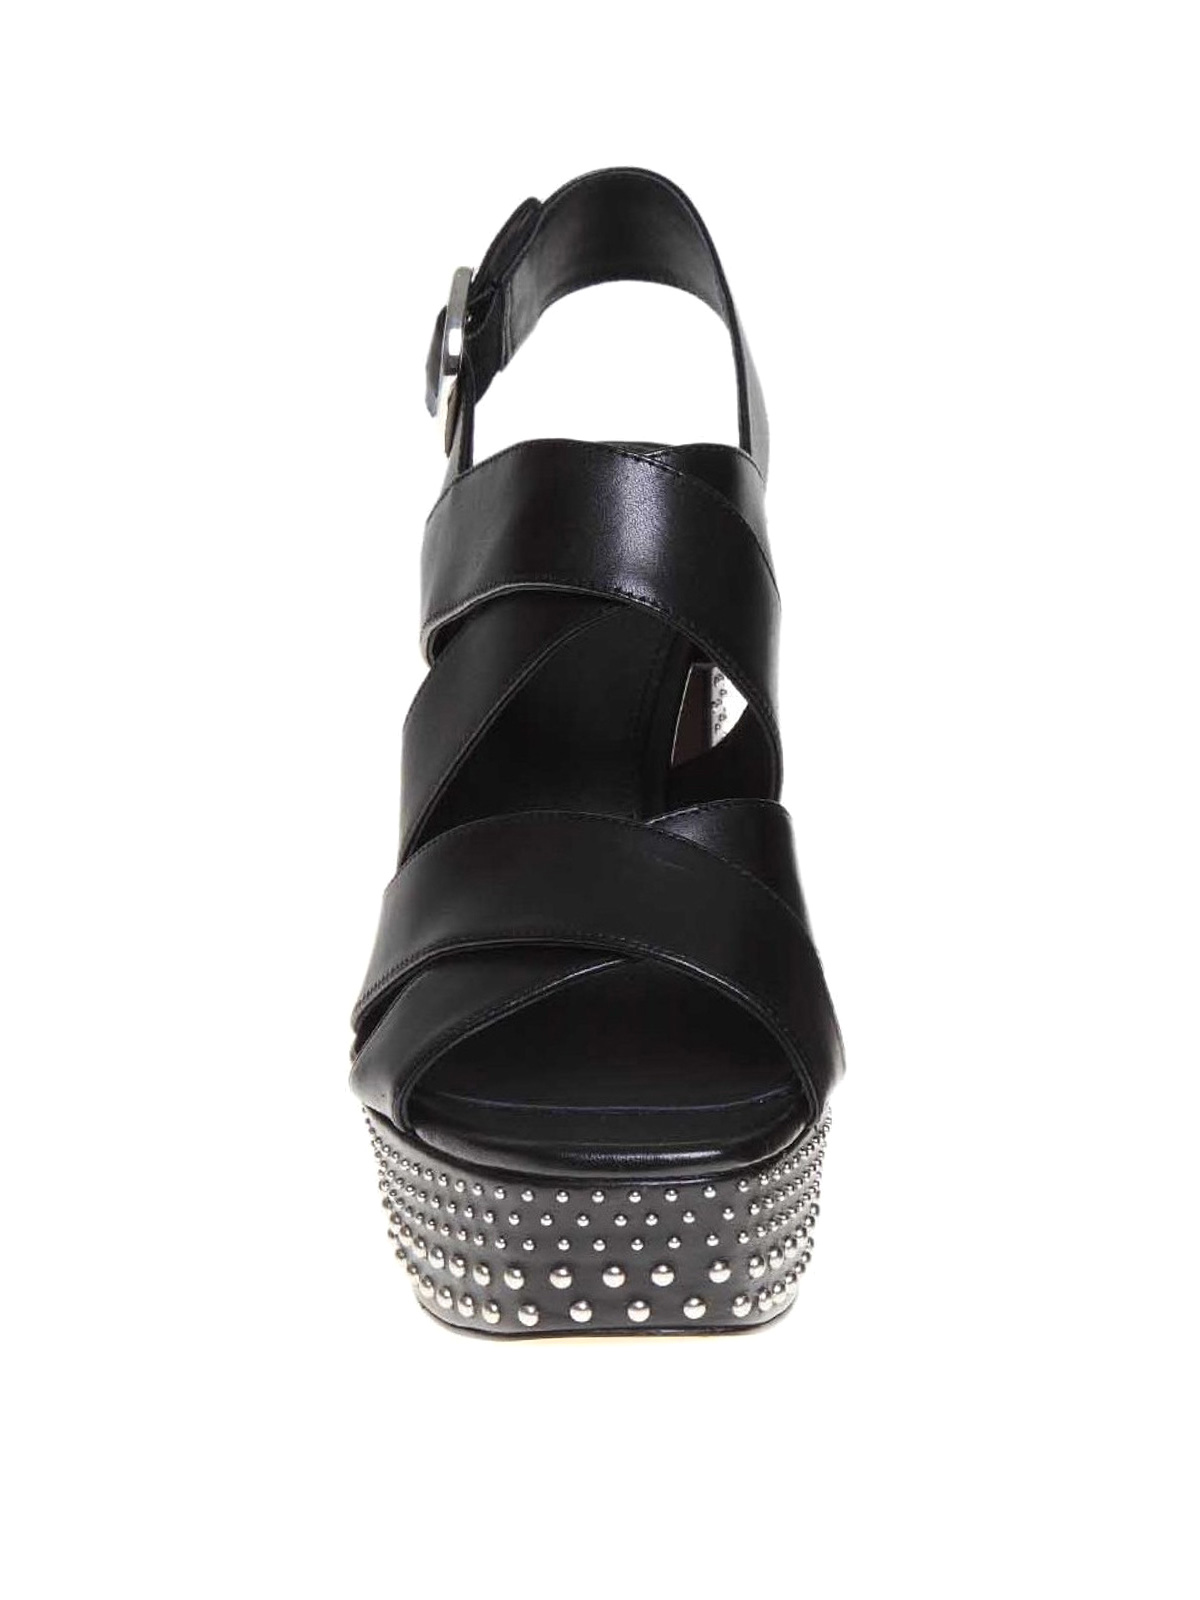 mila studded leather platform sandal